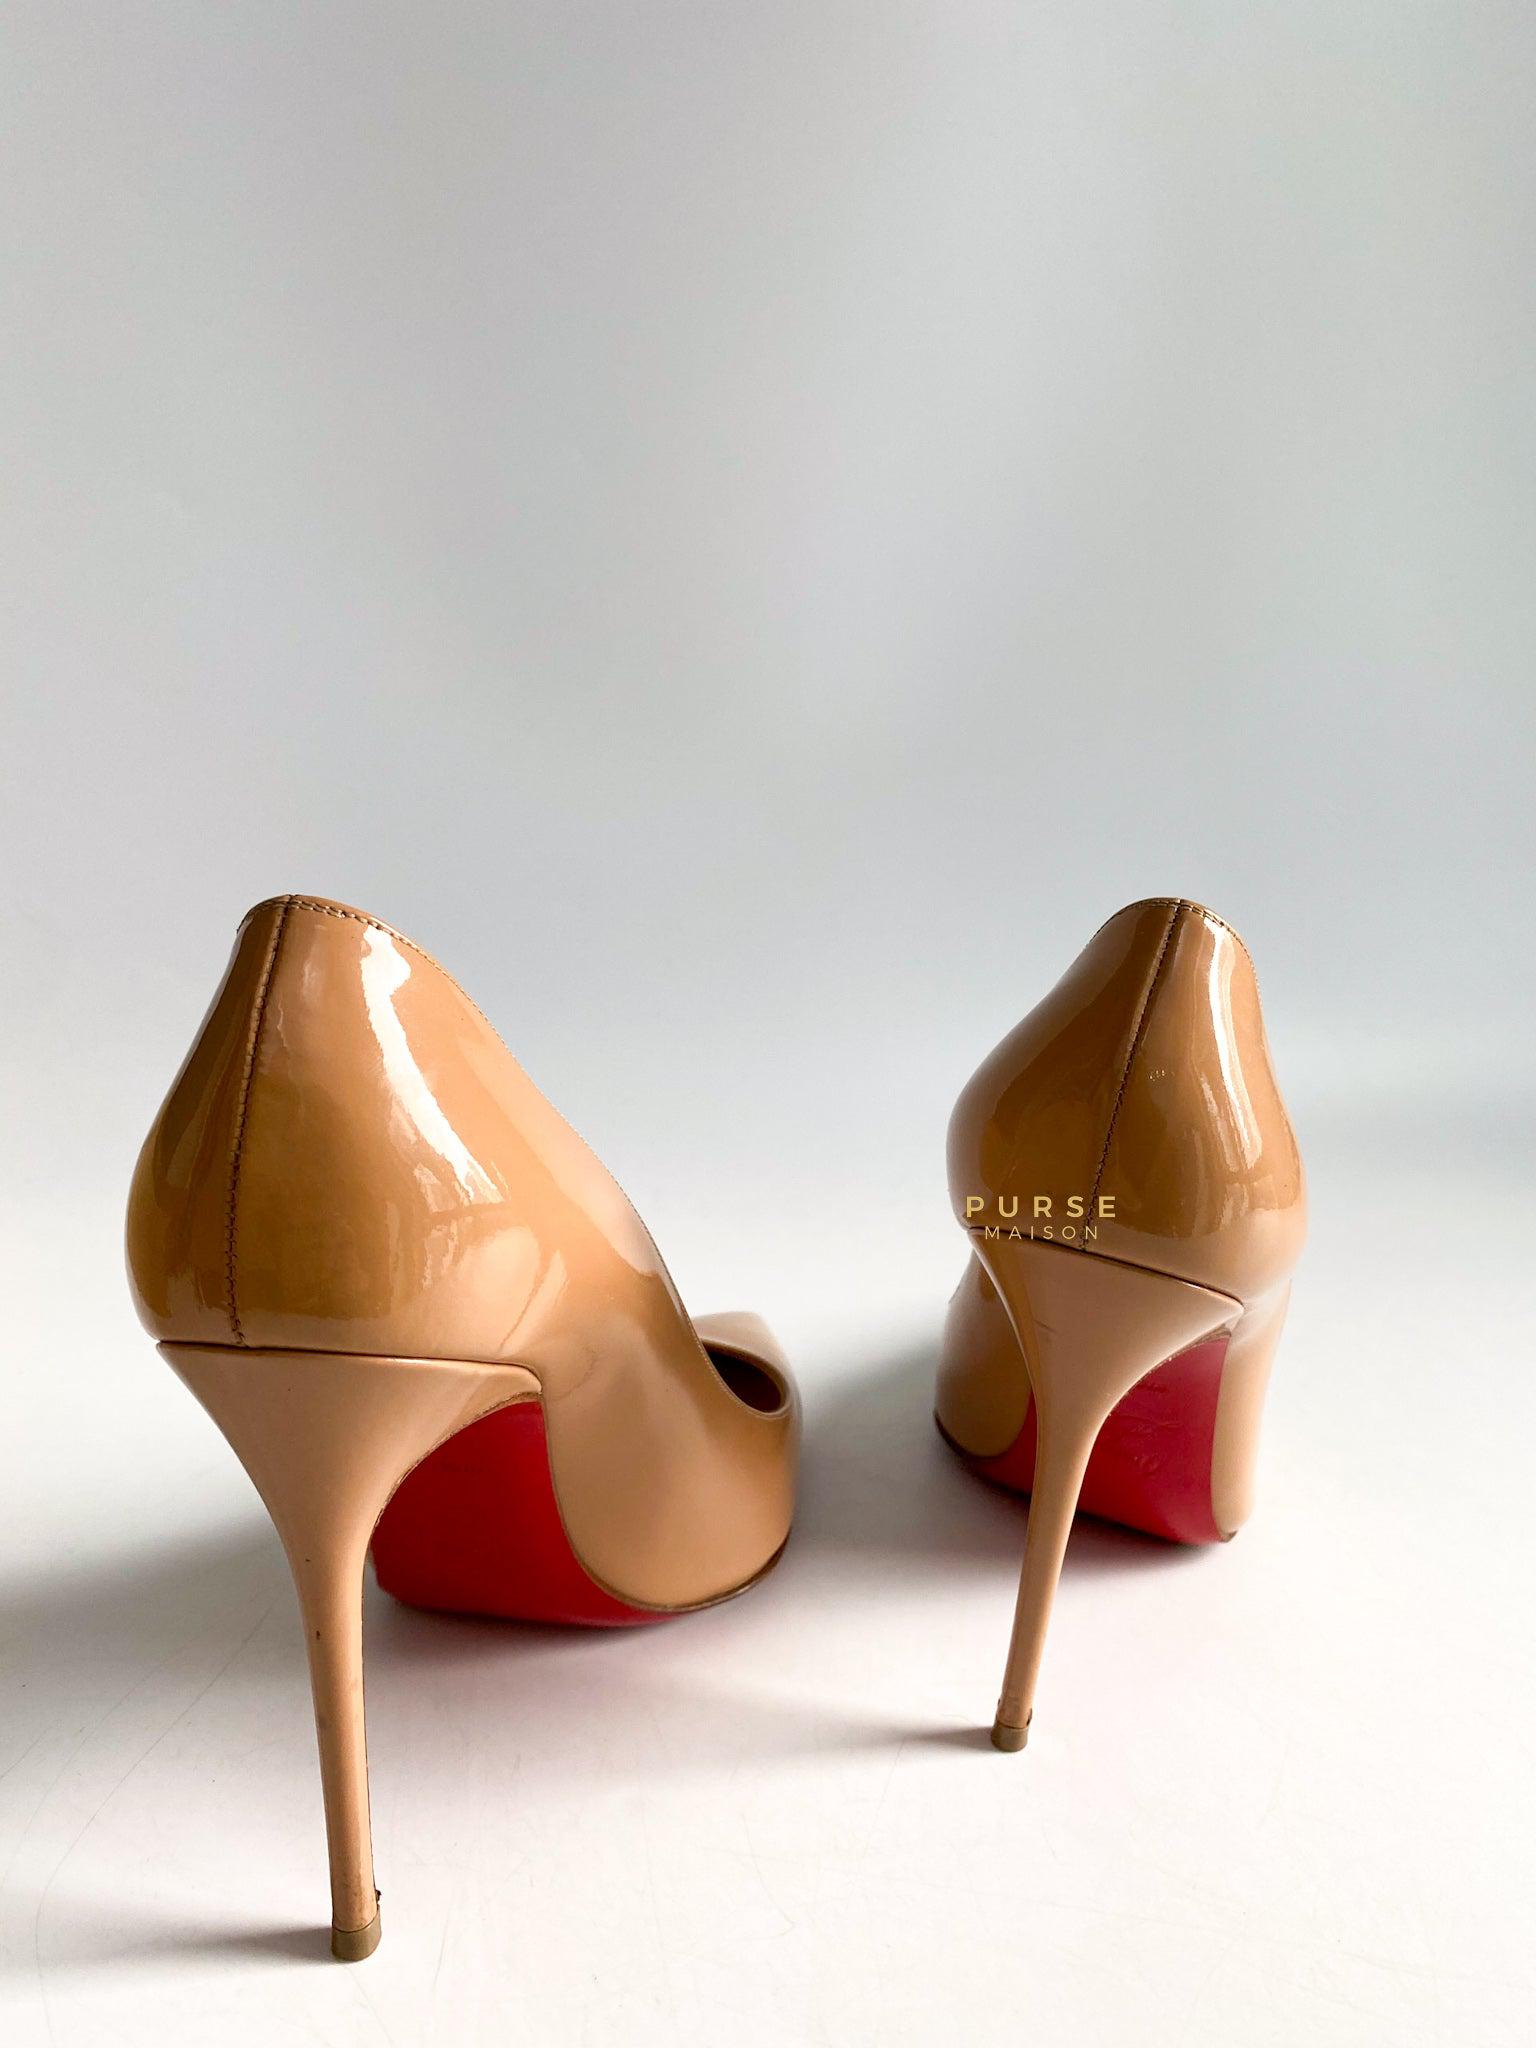 Christian Louboutin Decollete 554 100 Patent Nude Sandals